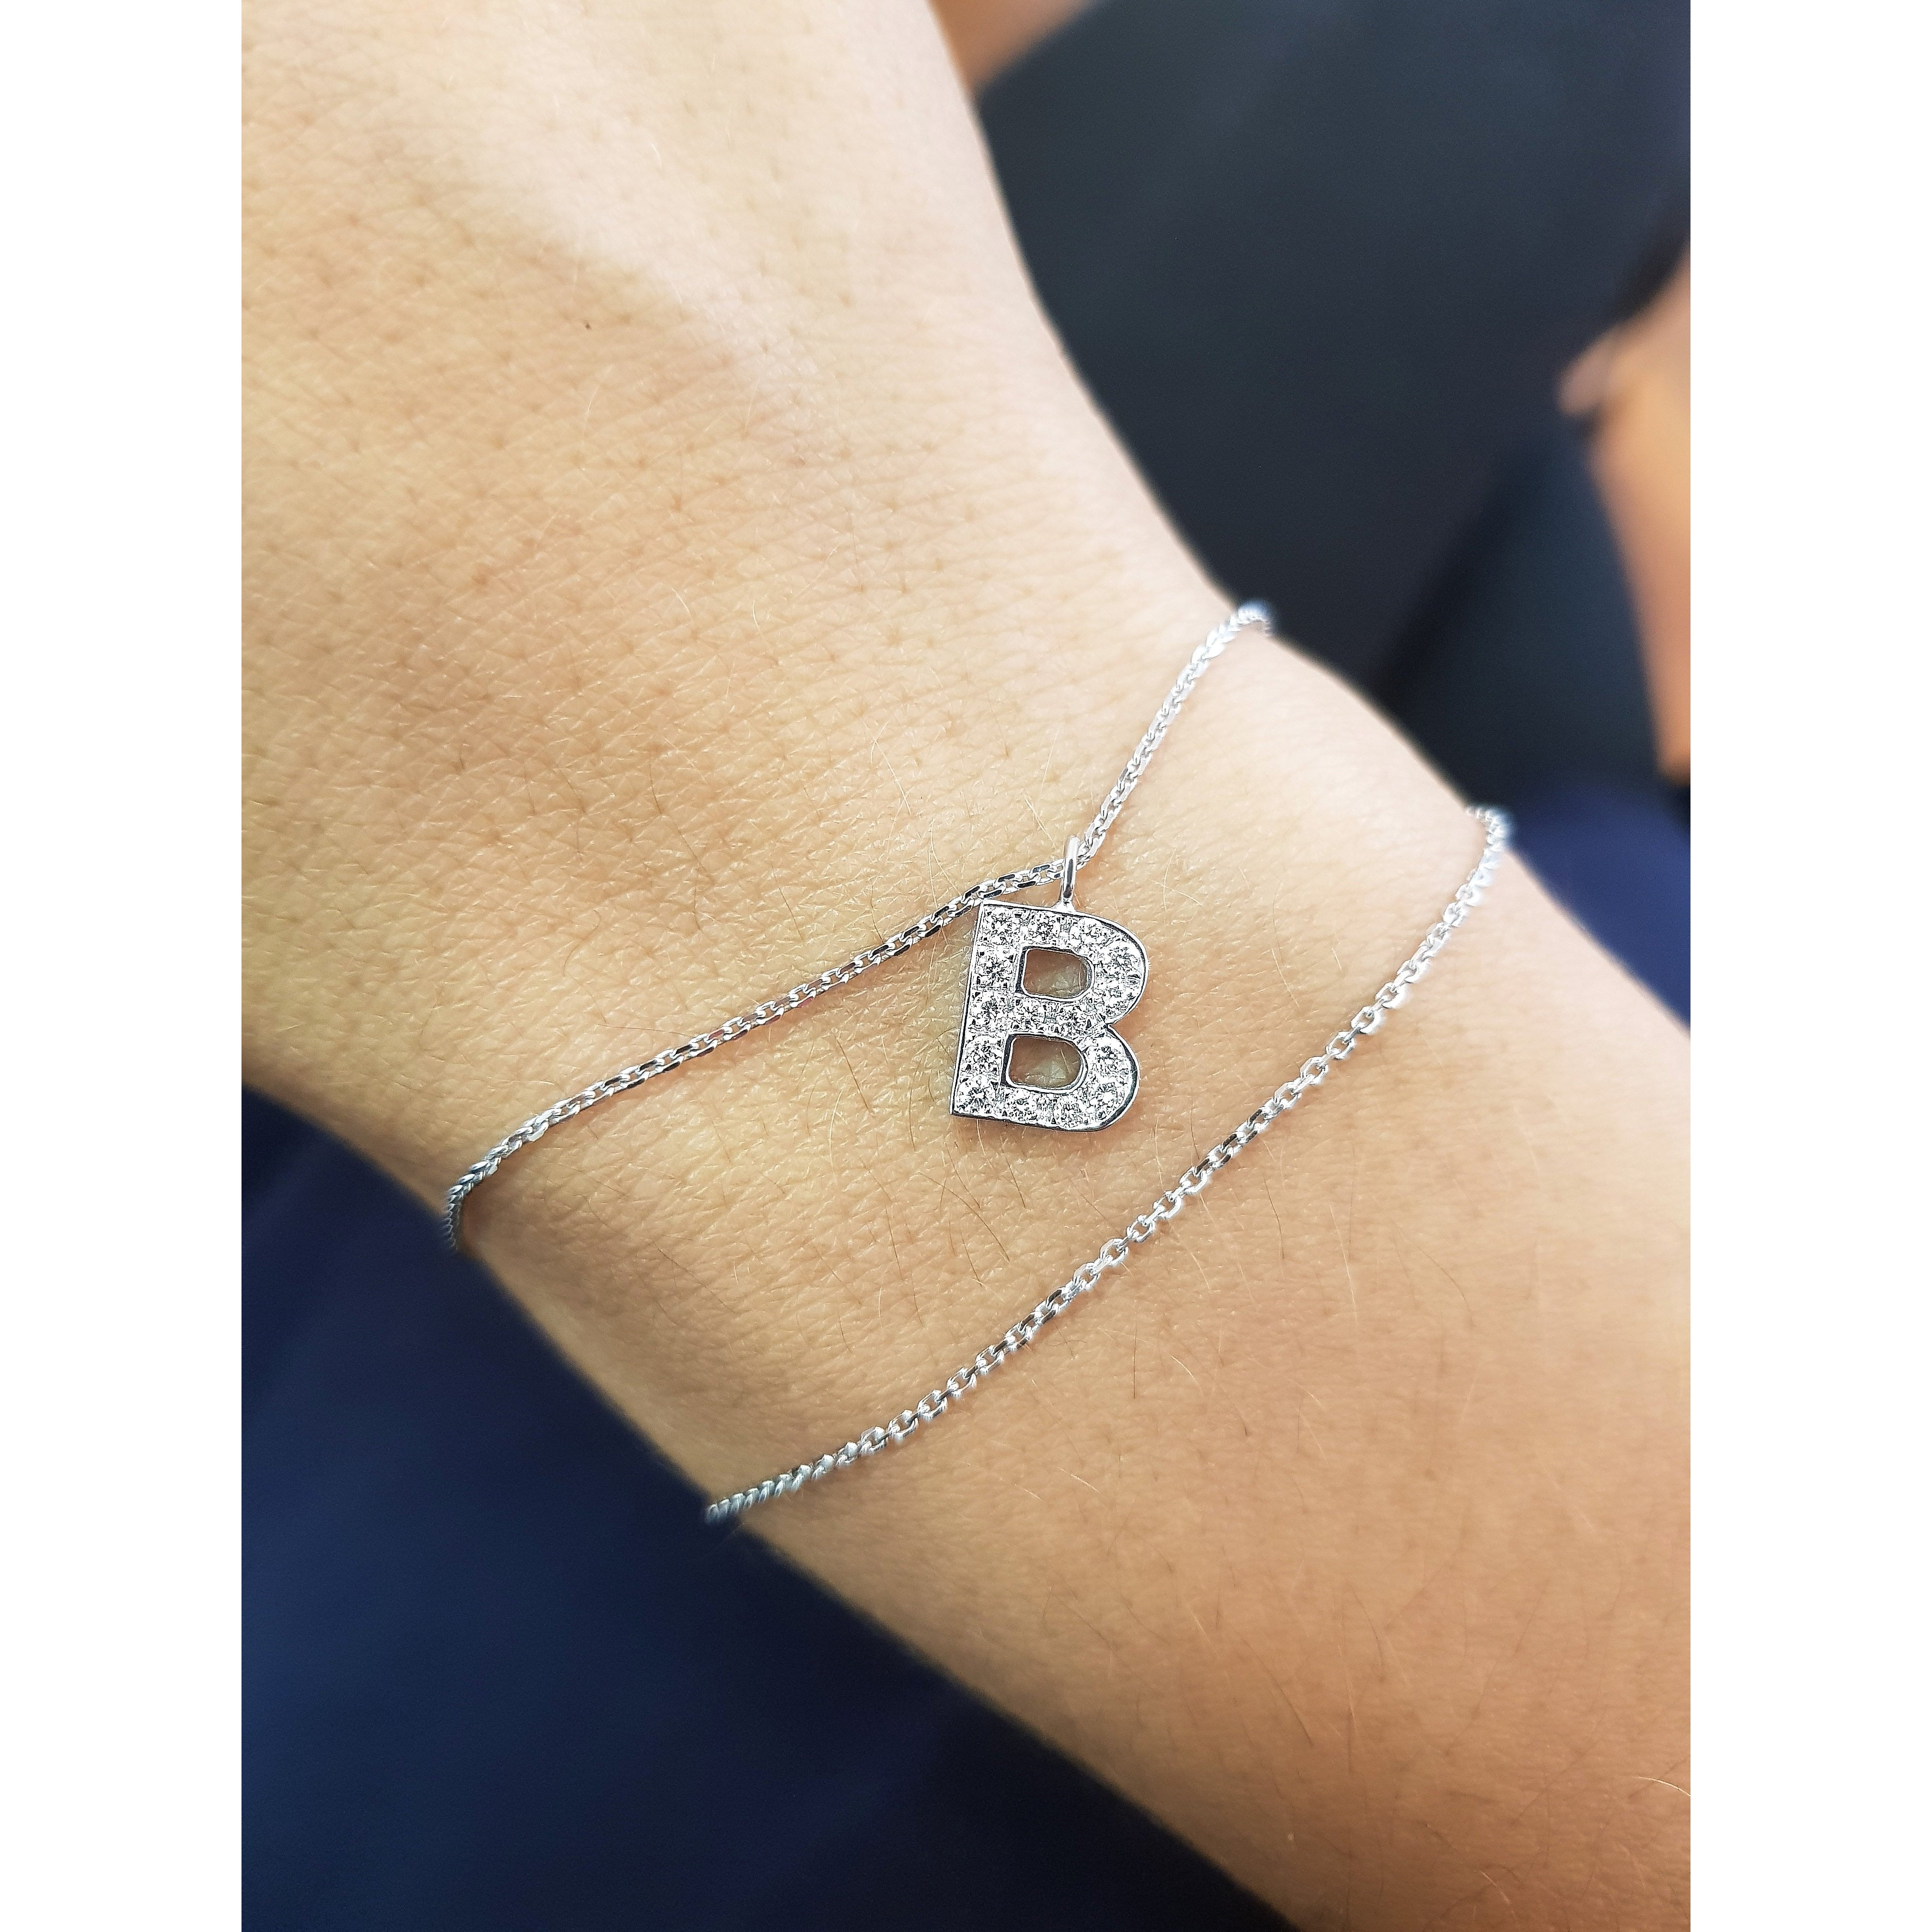 Barbara Letter Lab Grown Diamonds Bracelet   (0.15 Carat) -18K White Gold